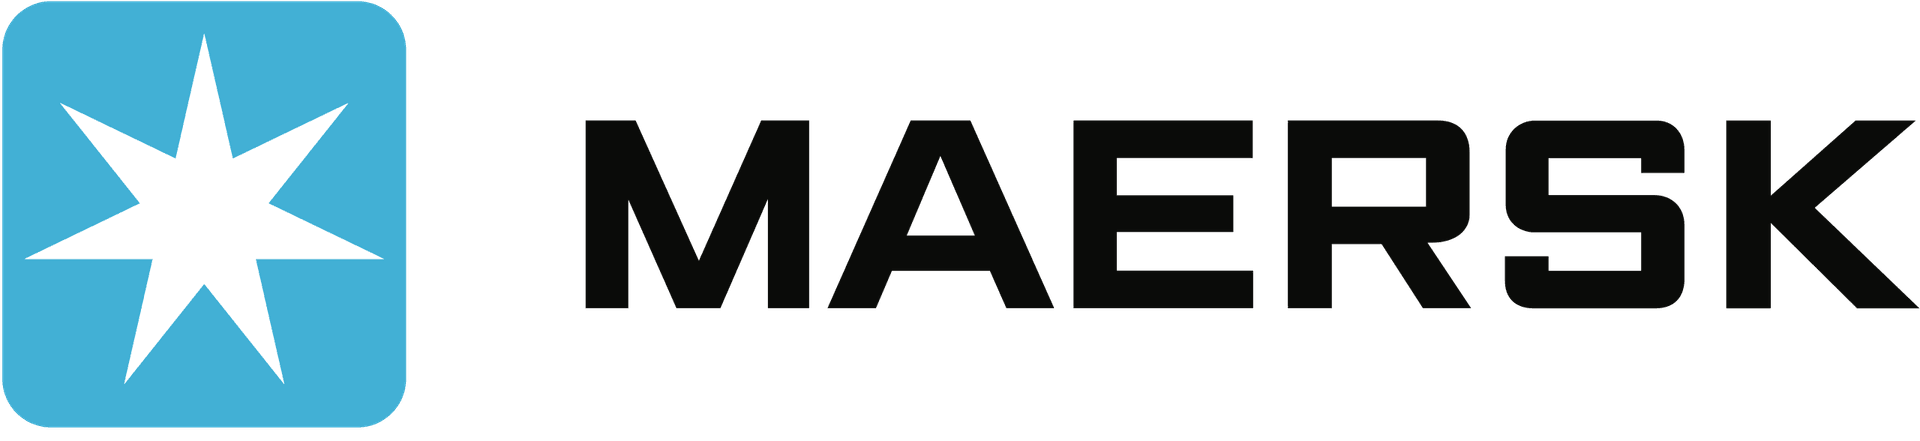 marketing strategy of maersk - maersk logo